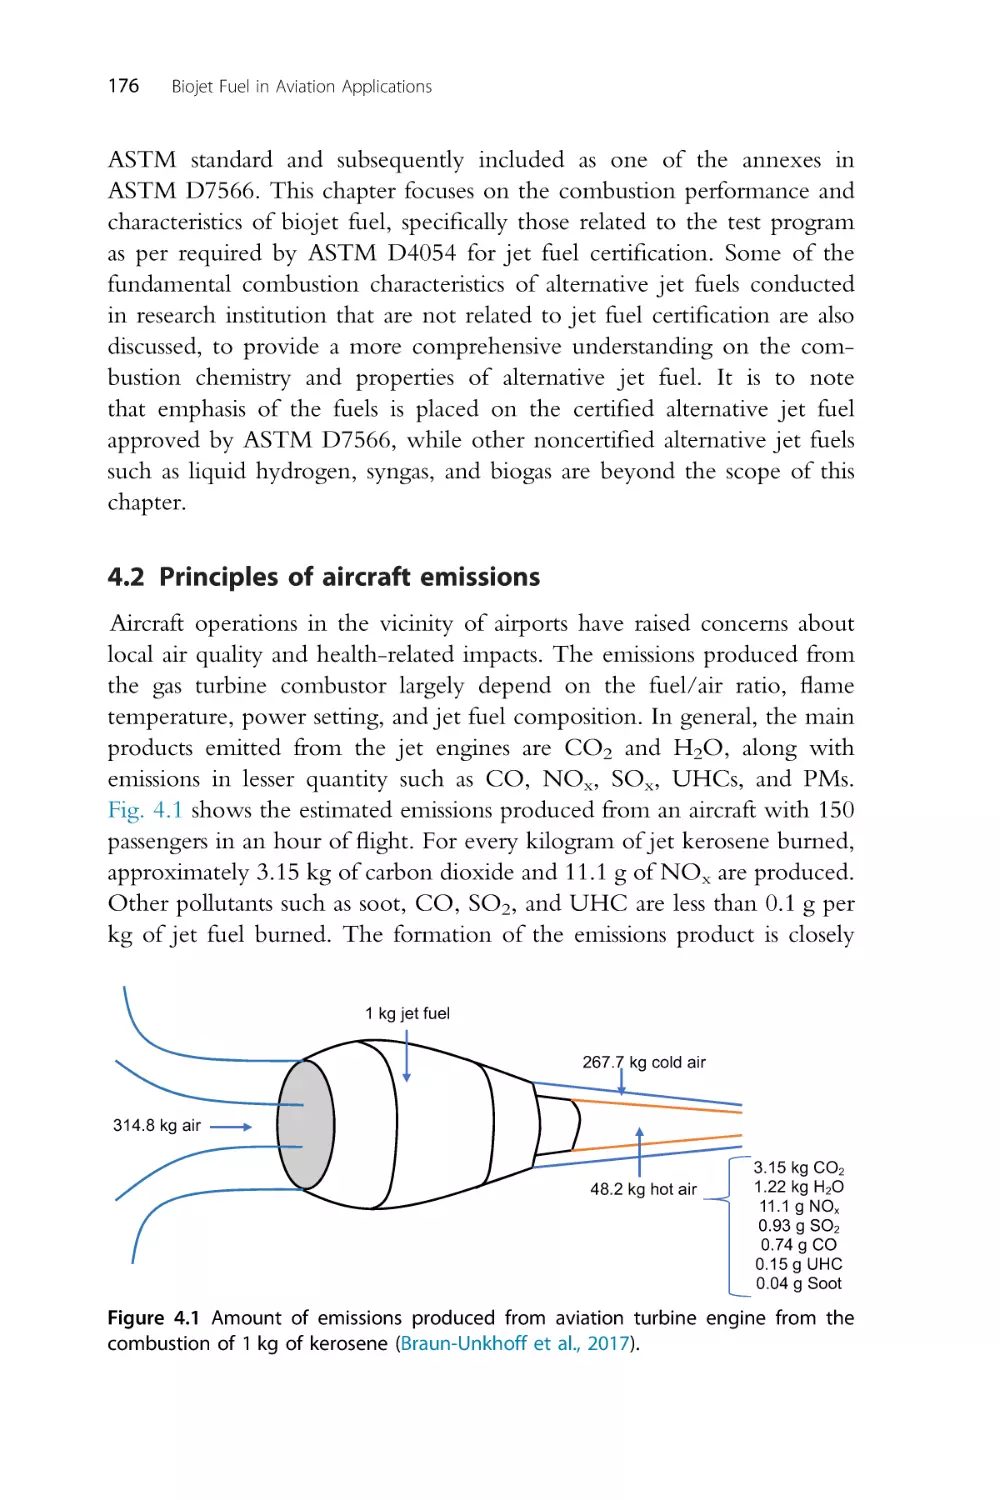 4.2 Principles of aircraft emissions